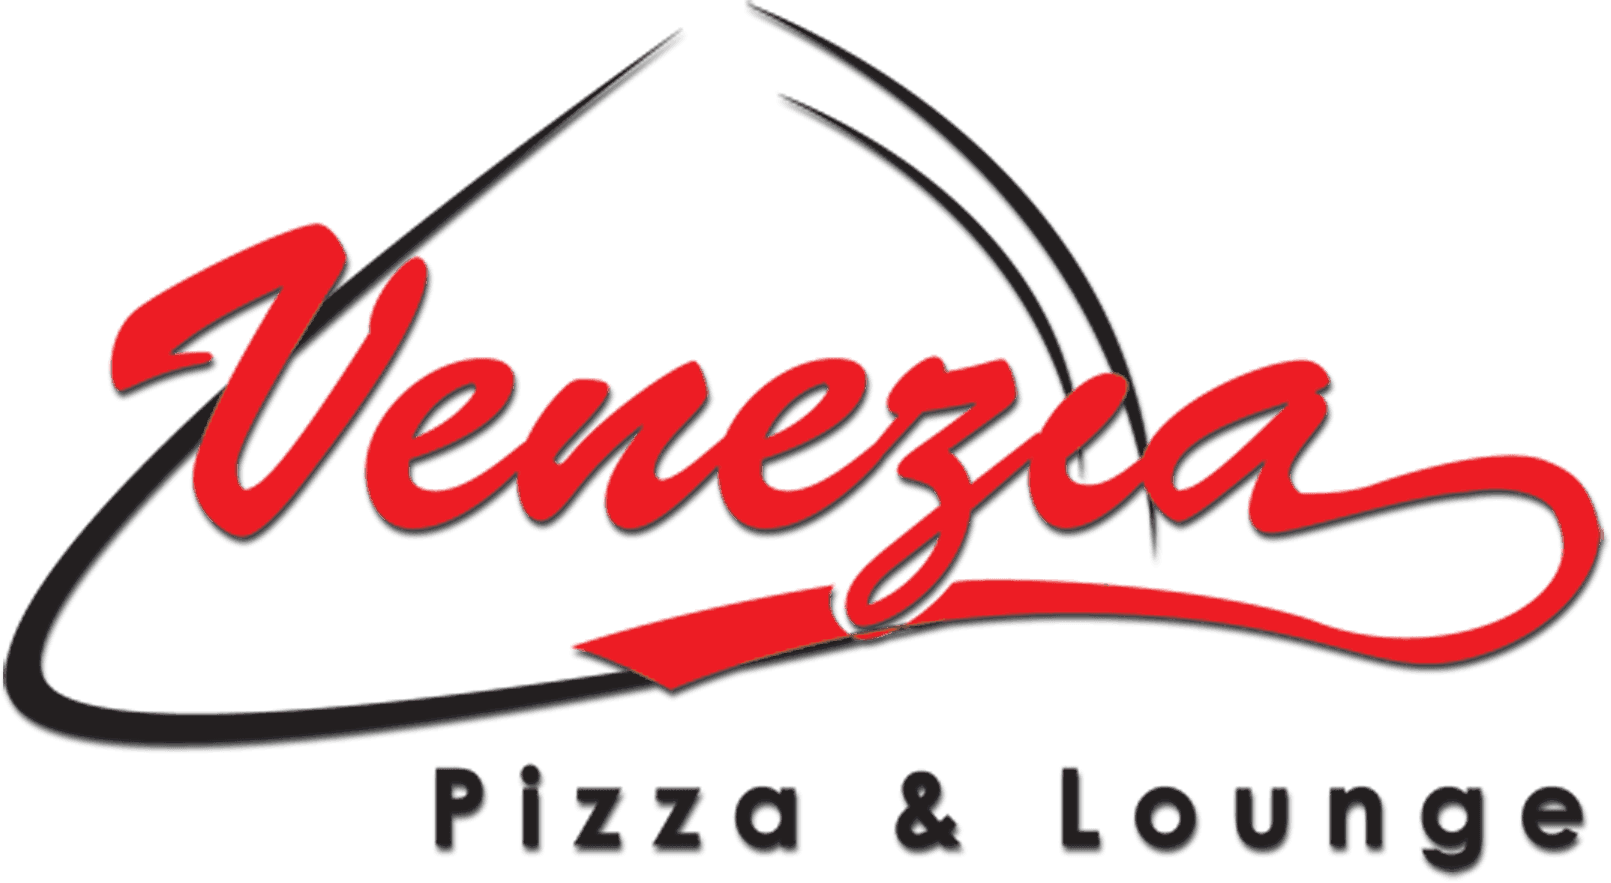 Venezia Pizza & Lounge - Venezia Grill, Pizzeria & Bar (1611x883)